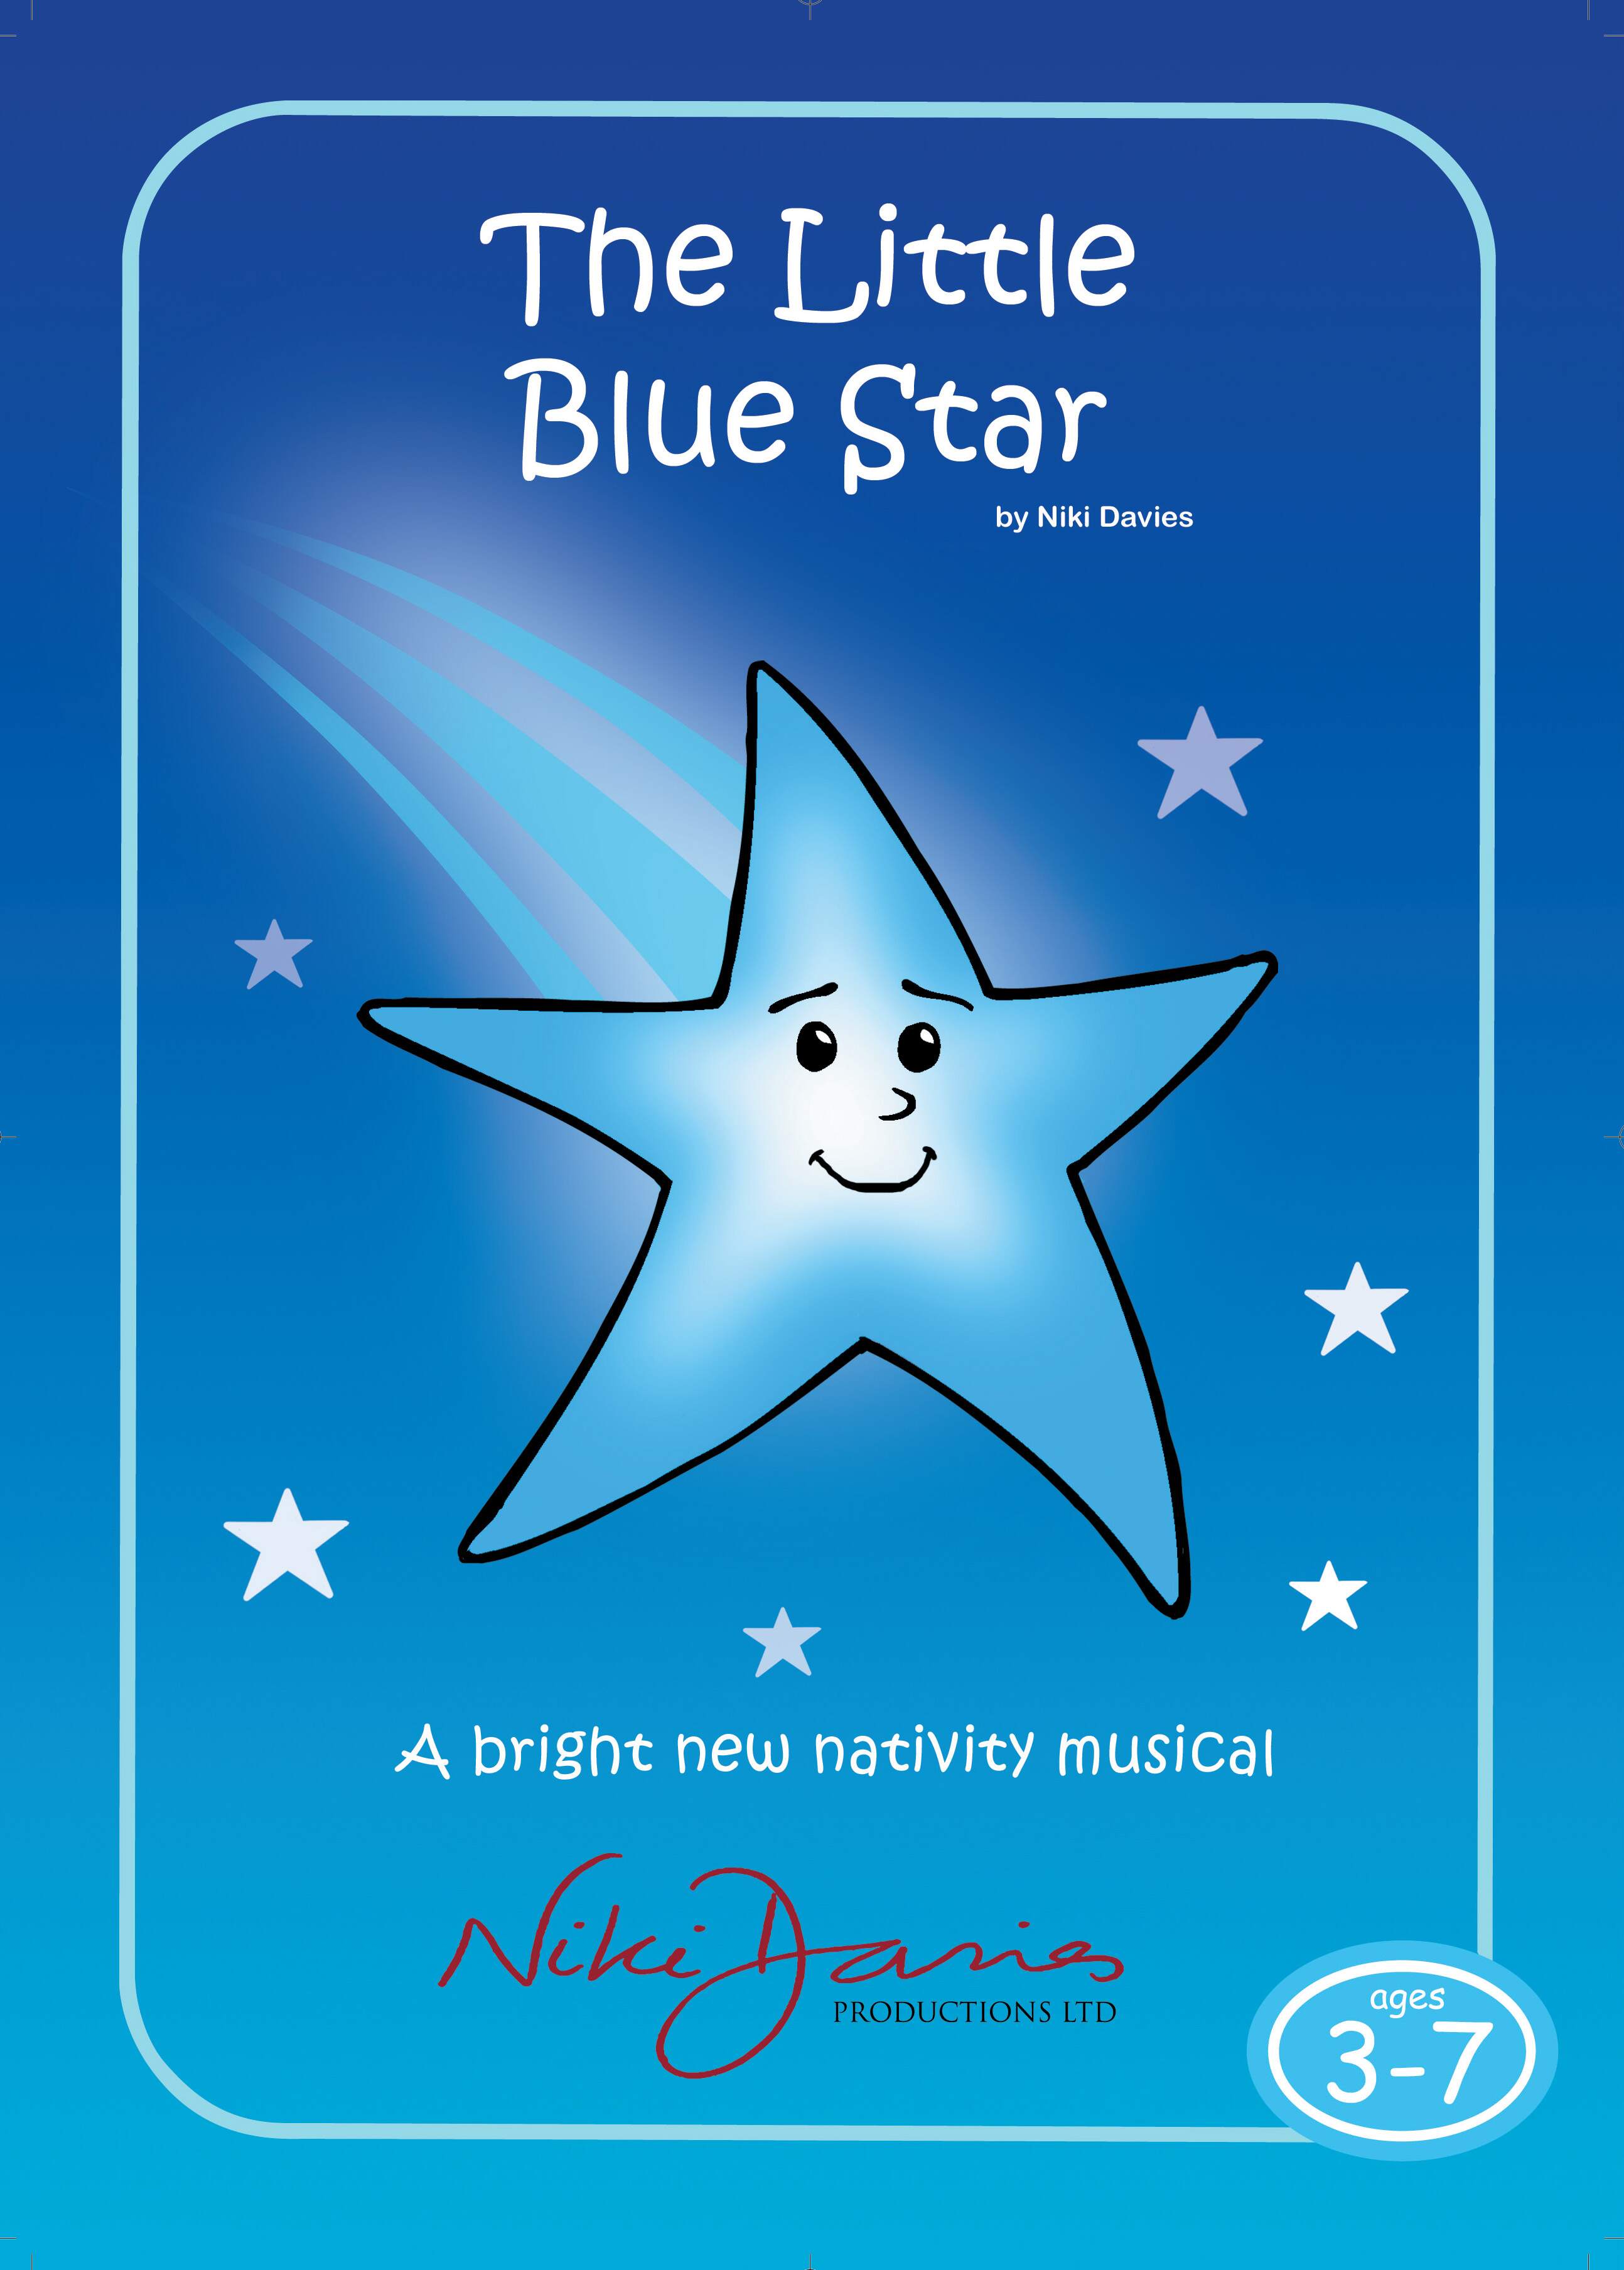 The Little Blue Star - A Glittering Nativity Musical